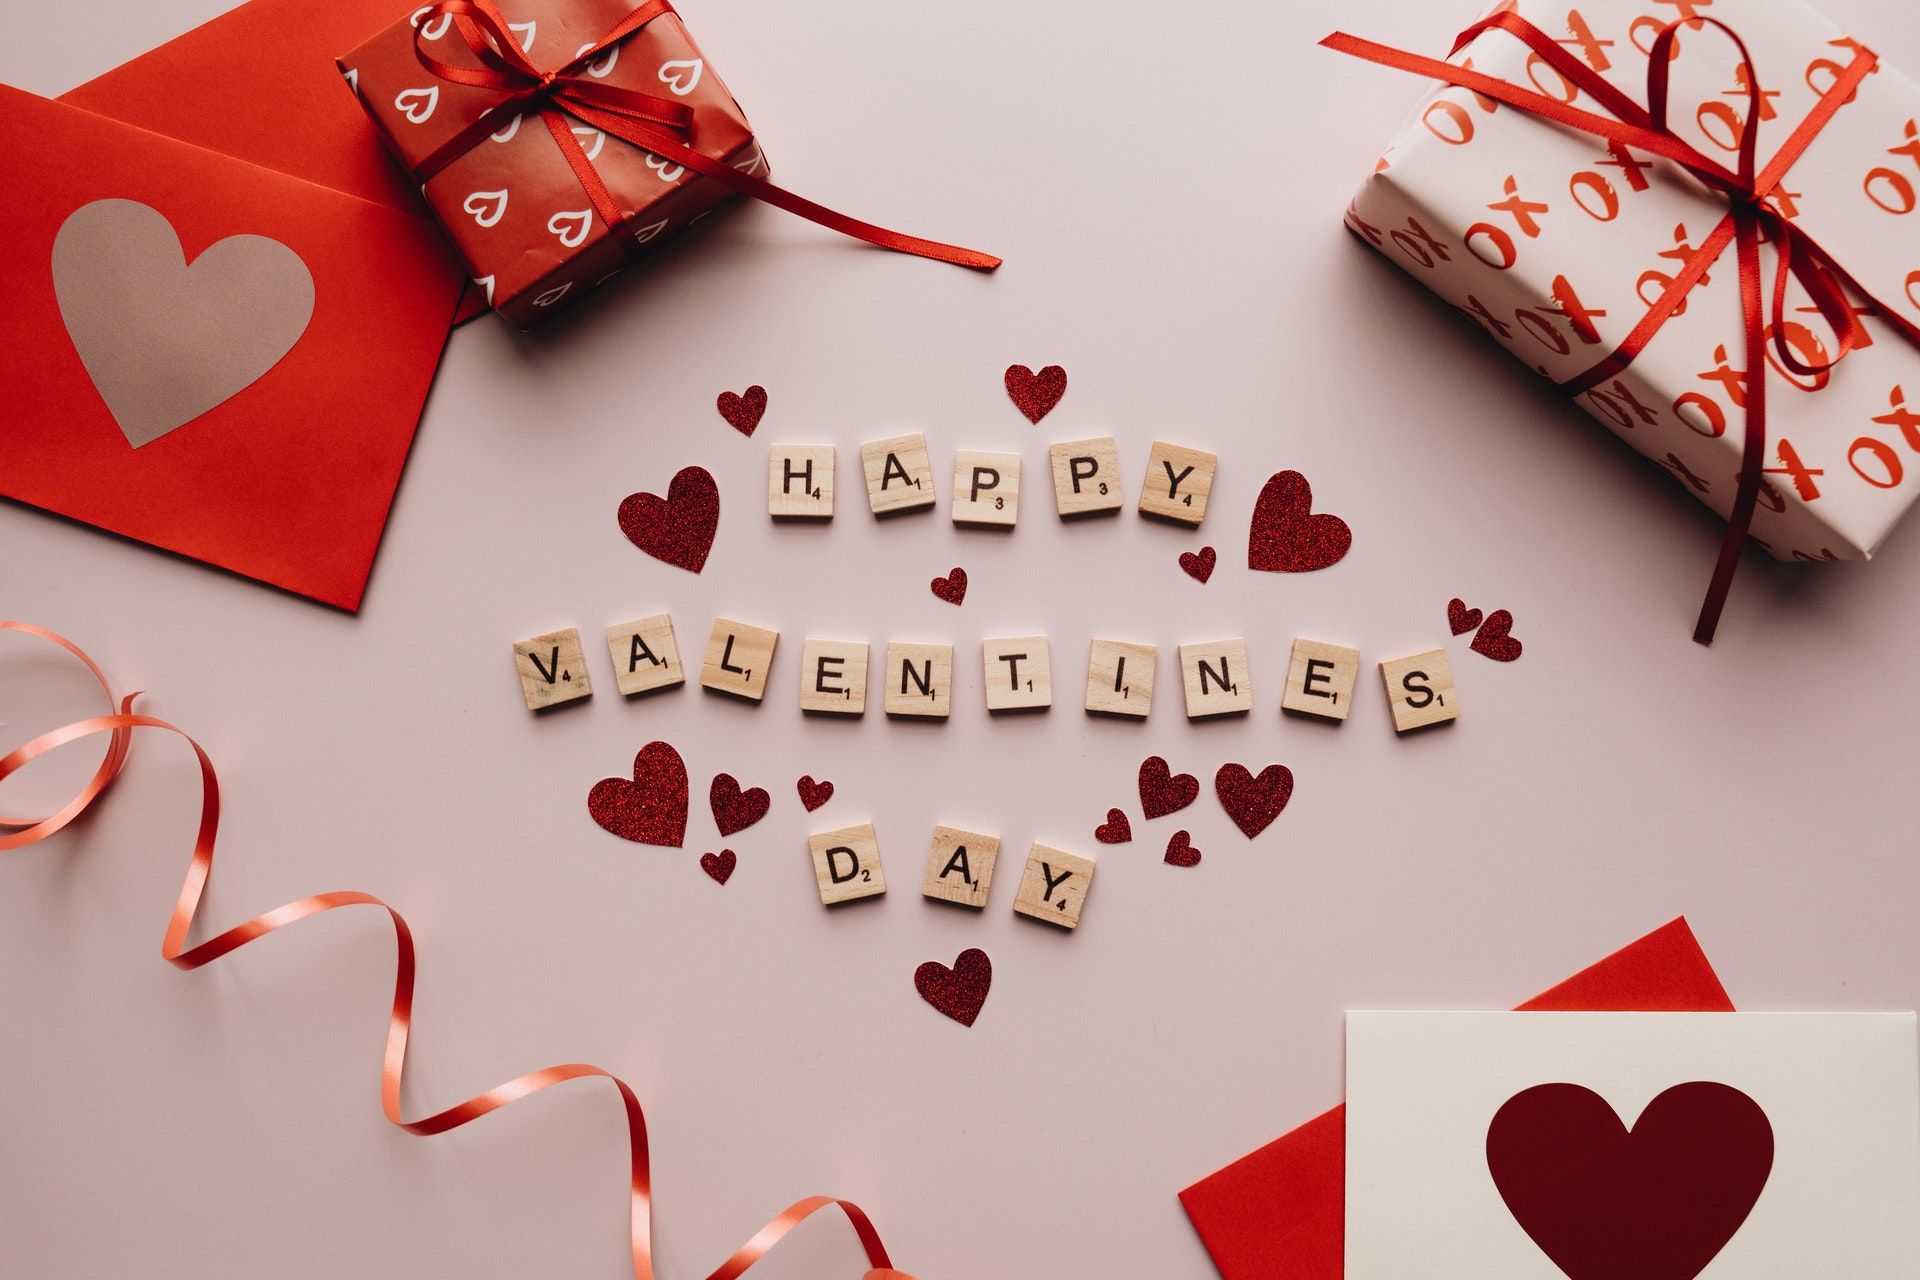 20 Twibbon Hari Valentine dan Cara Pakainya untuk Status WhatsApp